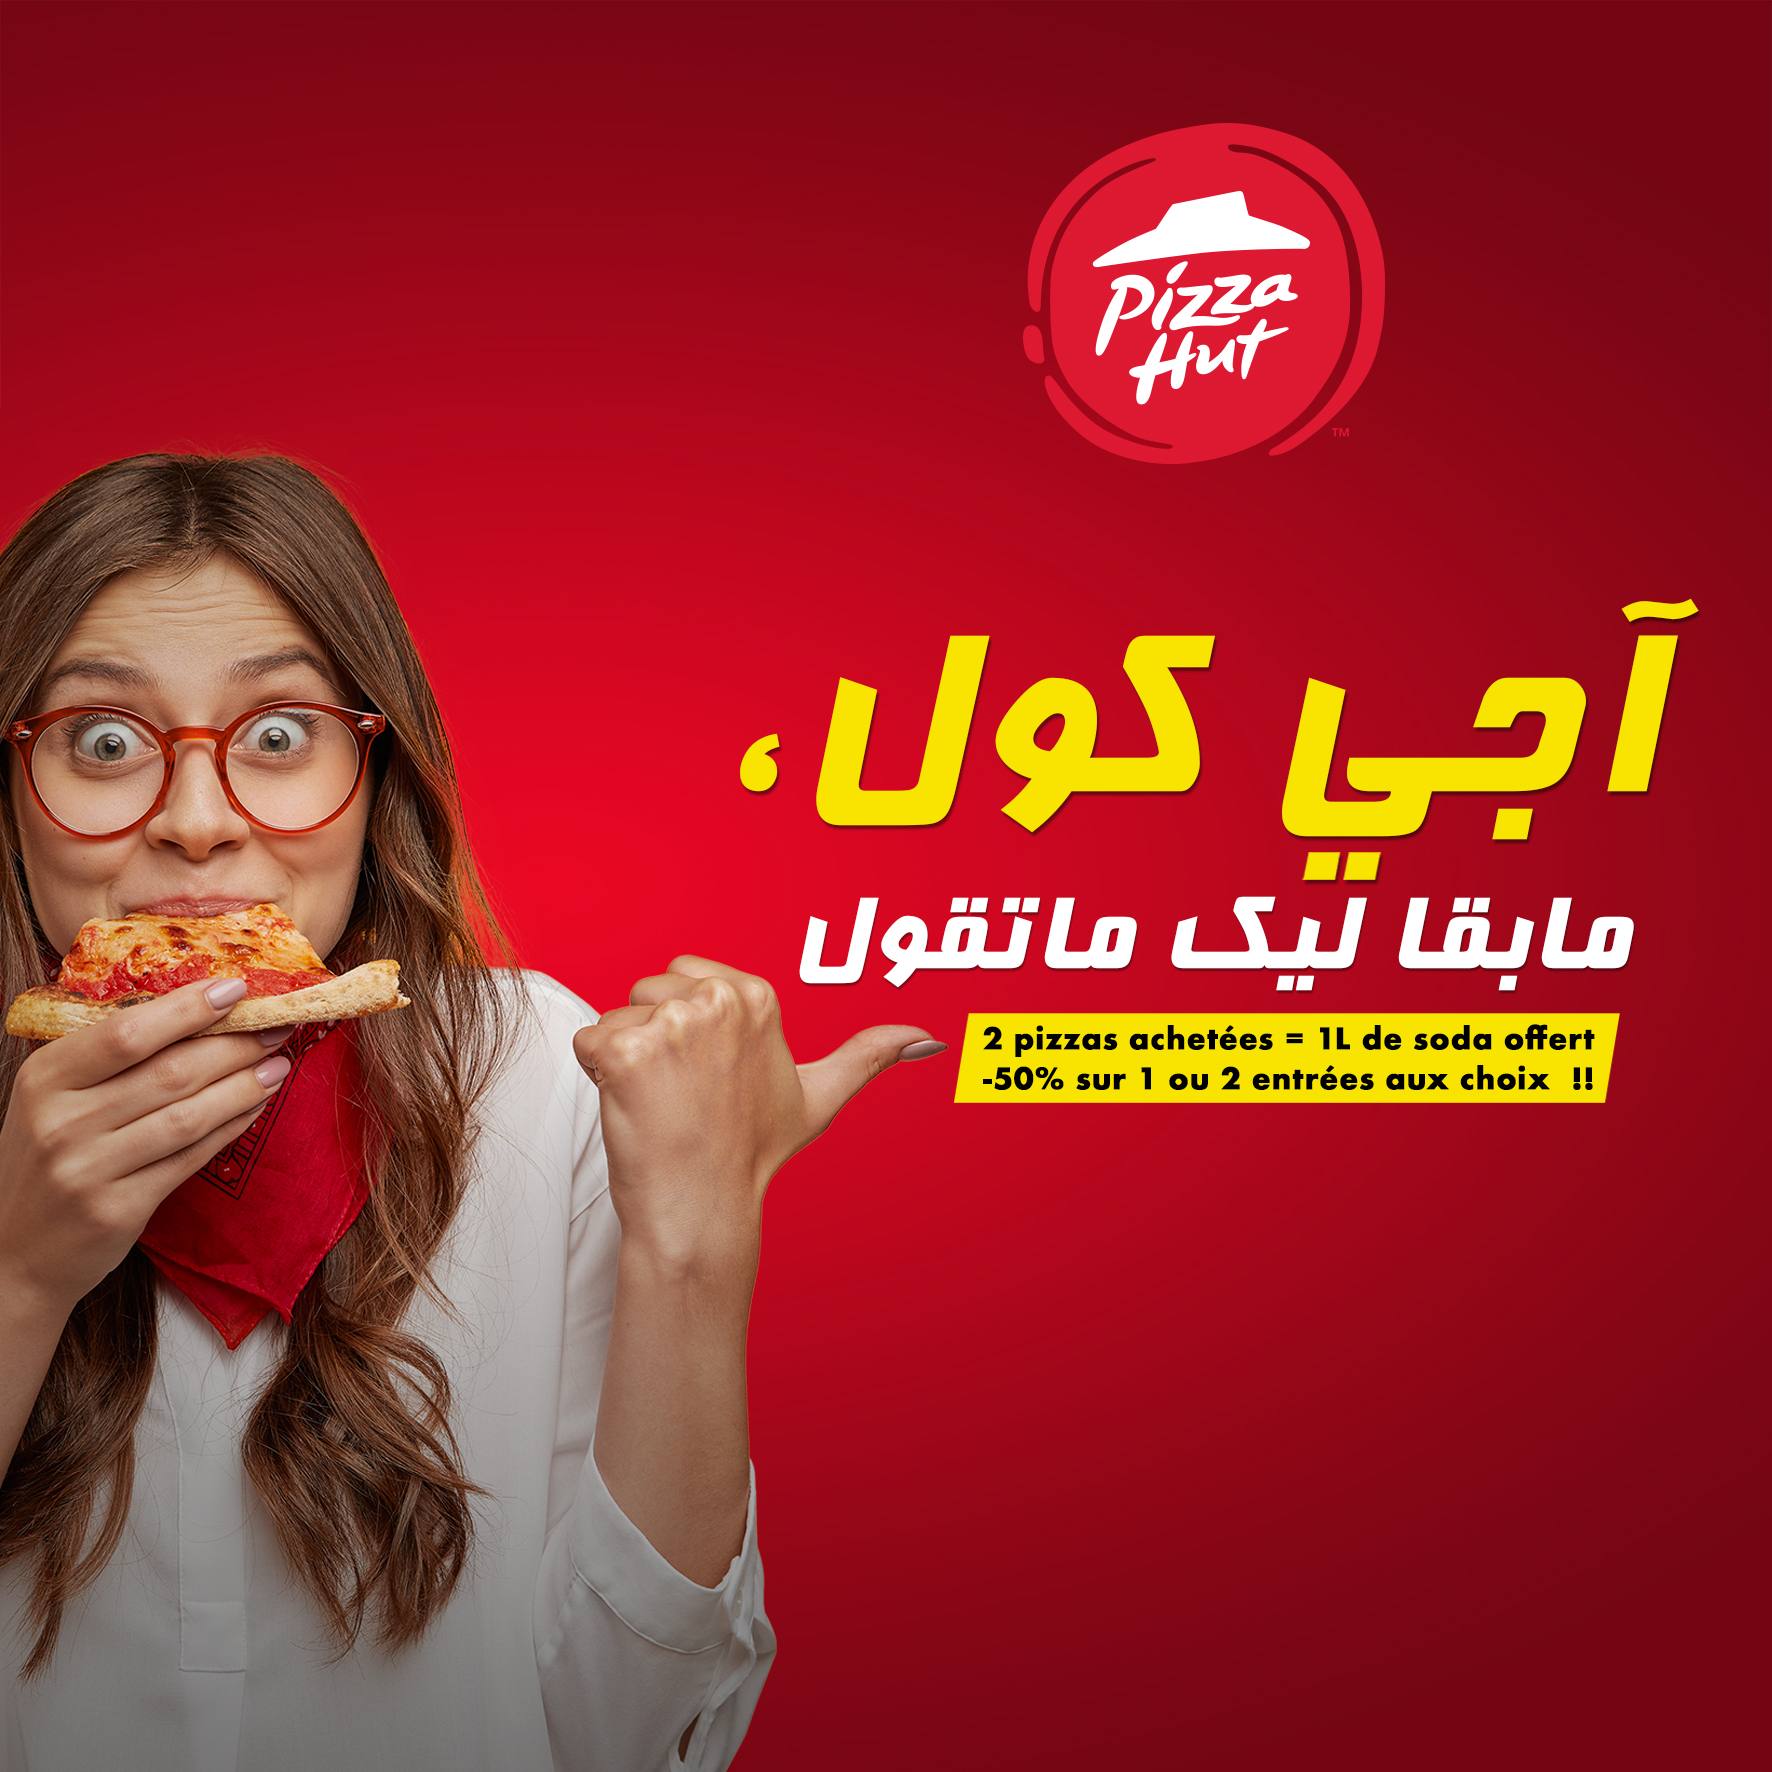 Offre Pizza Hut Maroc -50% Livraison Gratuite